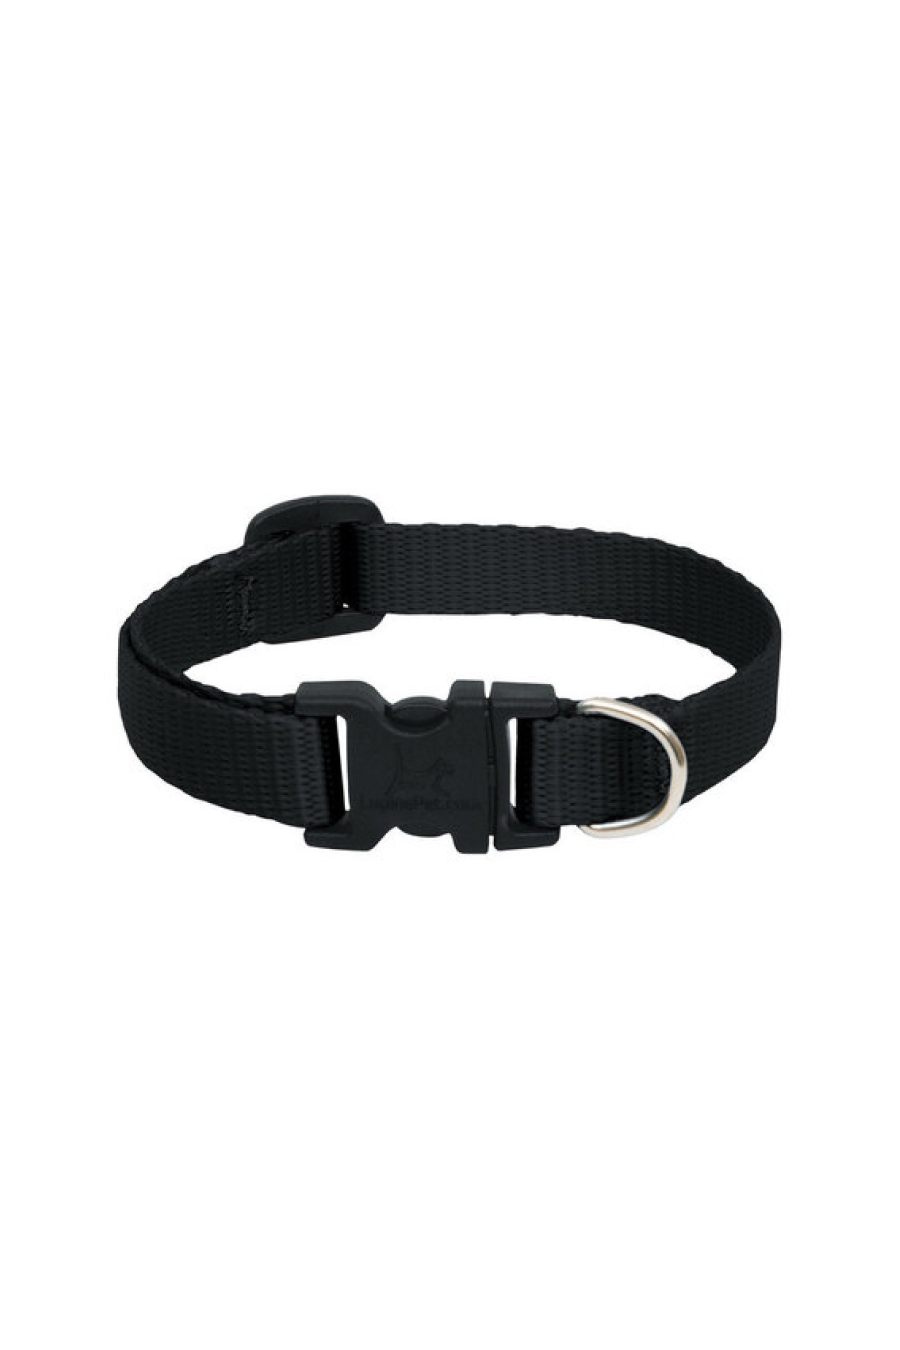 Lupine Dog Collar -  3/4''x9-14'' - Black